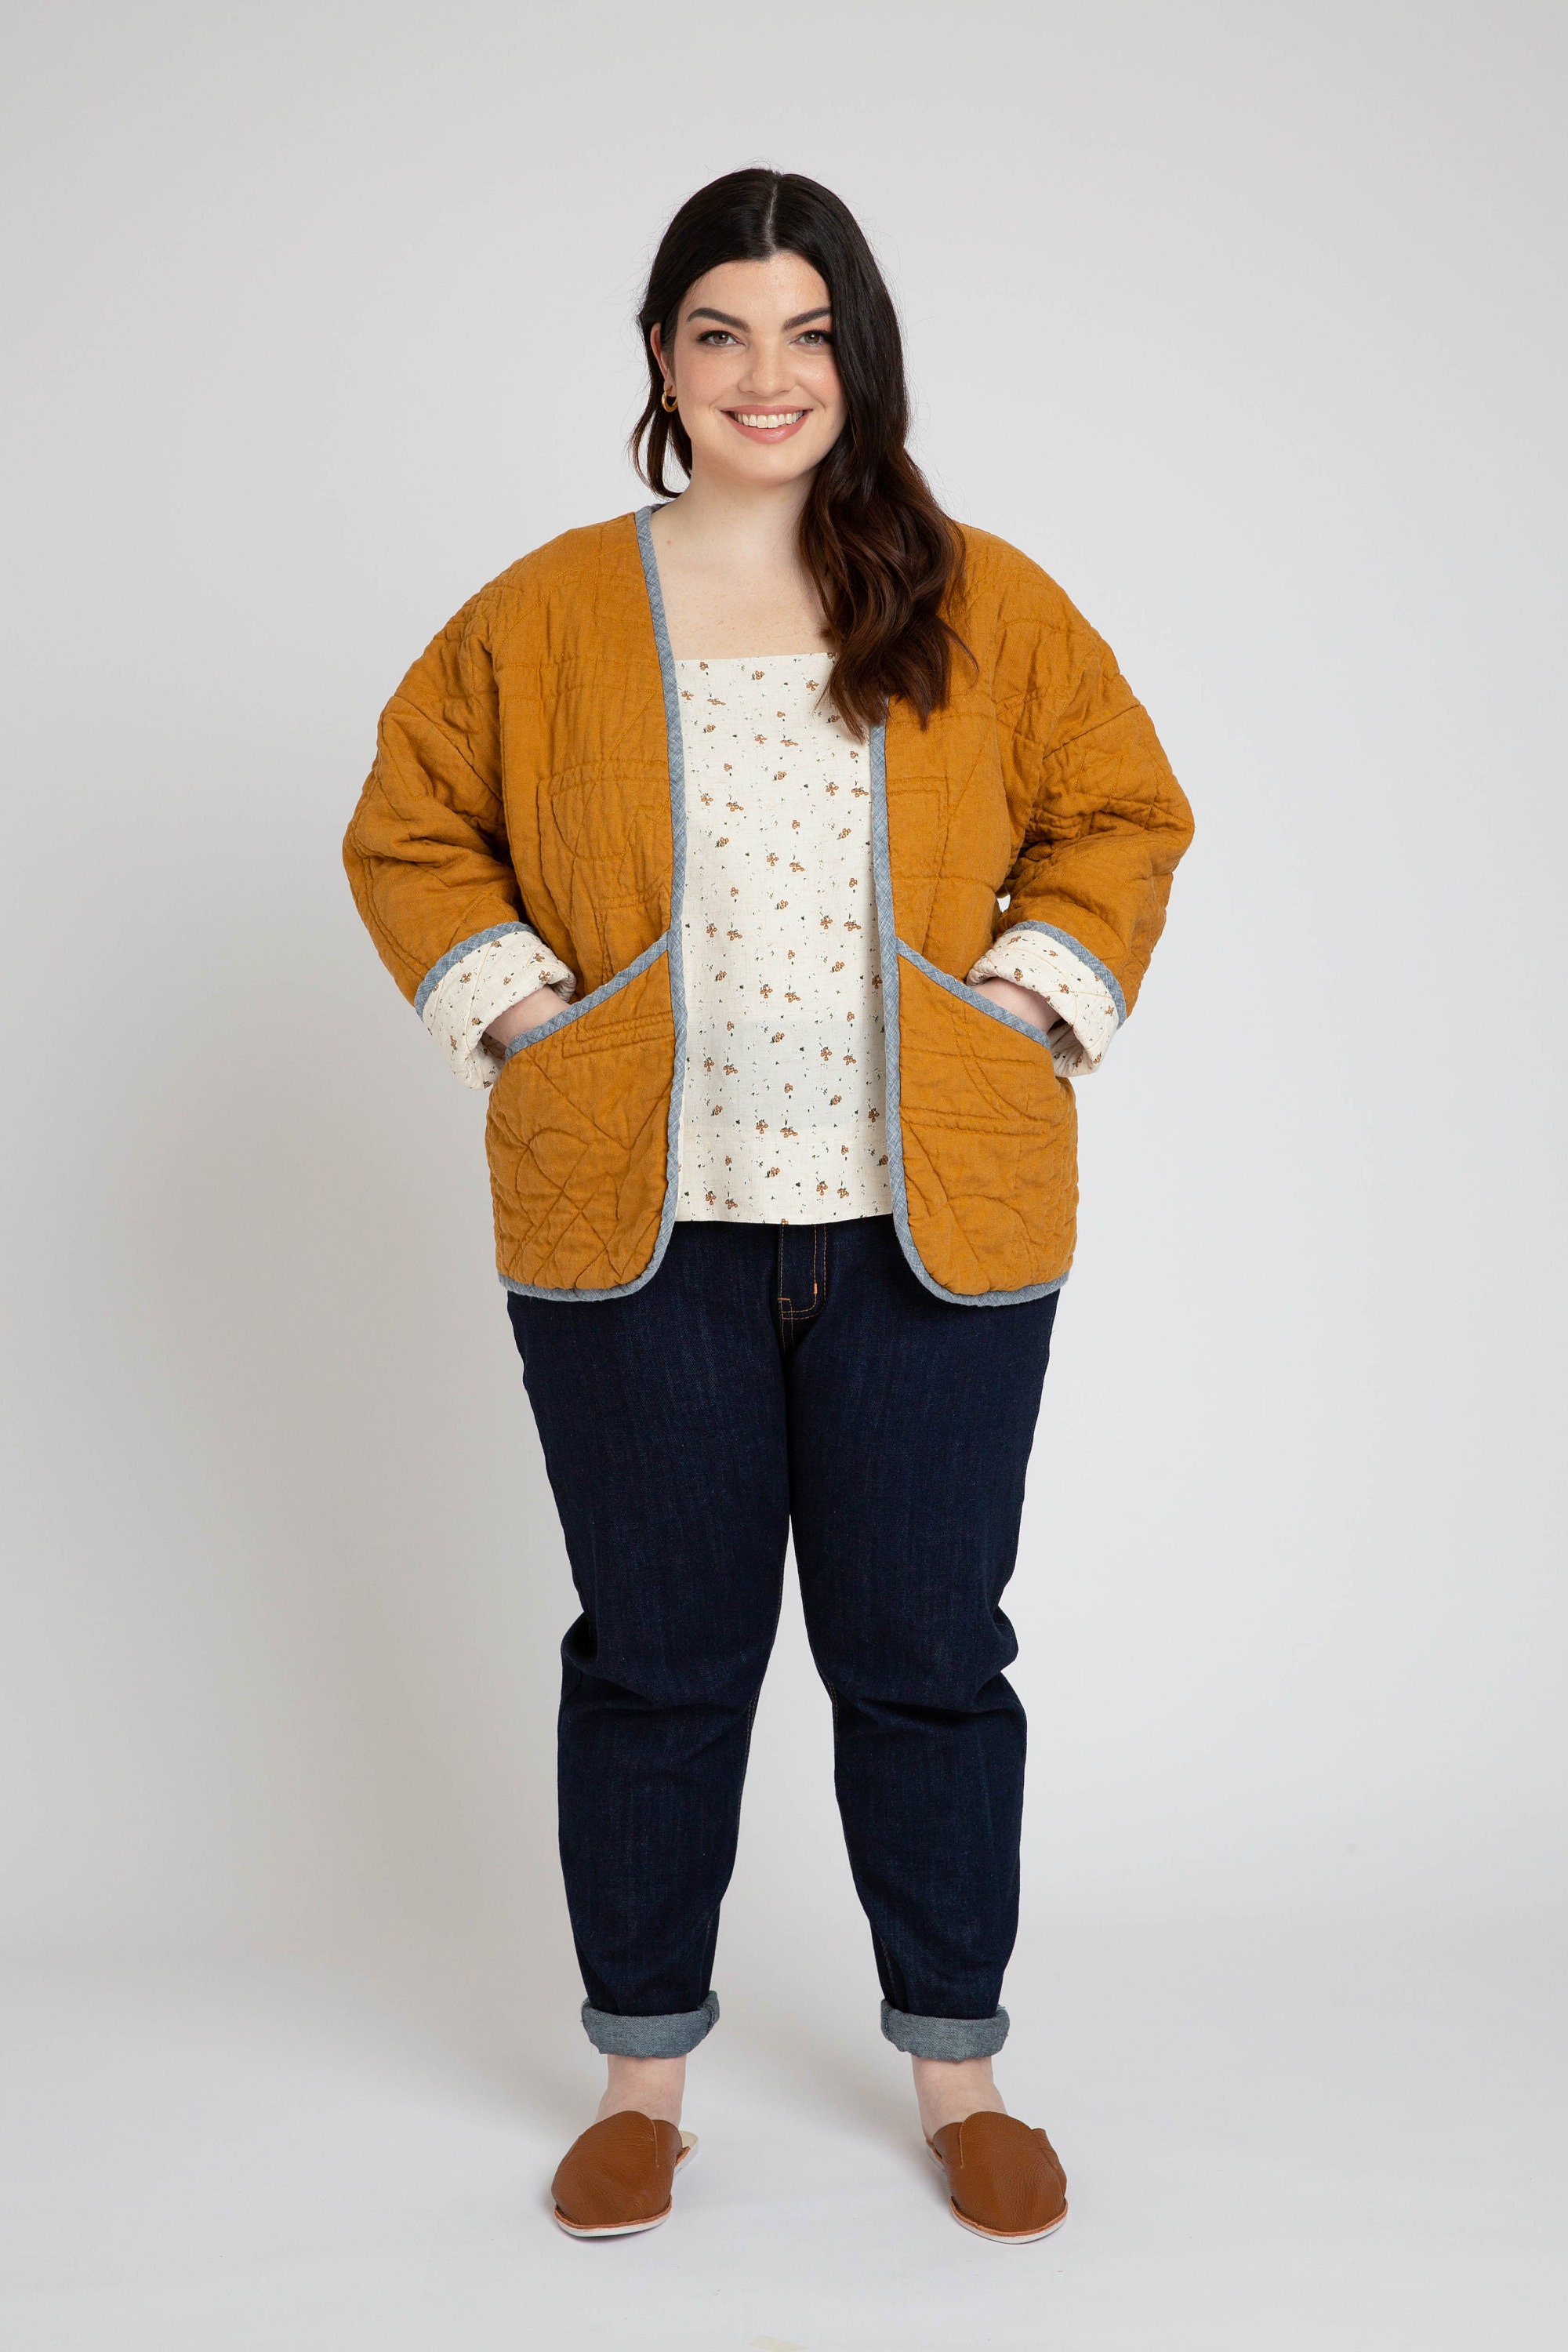 Hovea Quilted Jacket Pattern Plus Sizes 14-34 Megan Nielsen